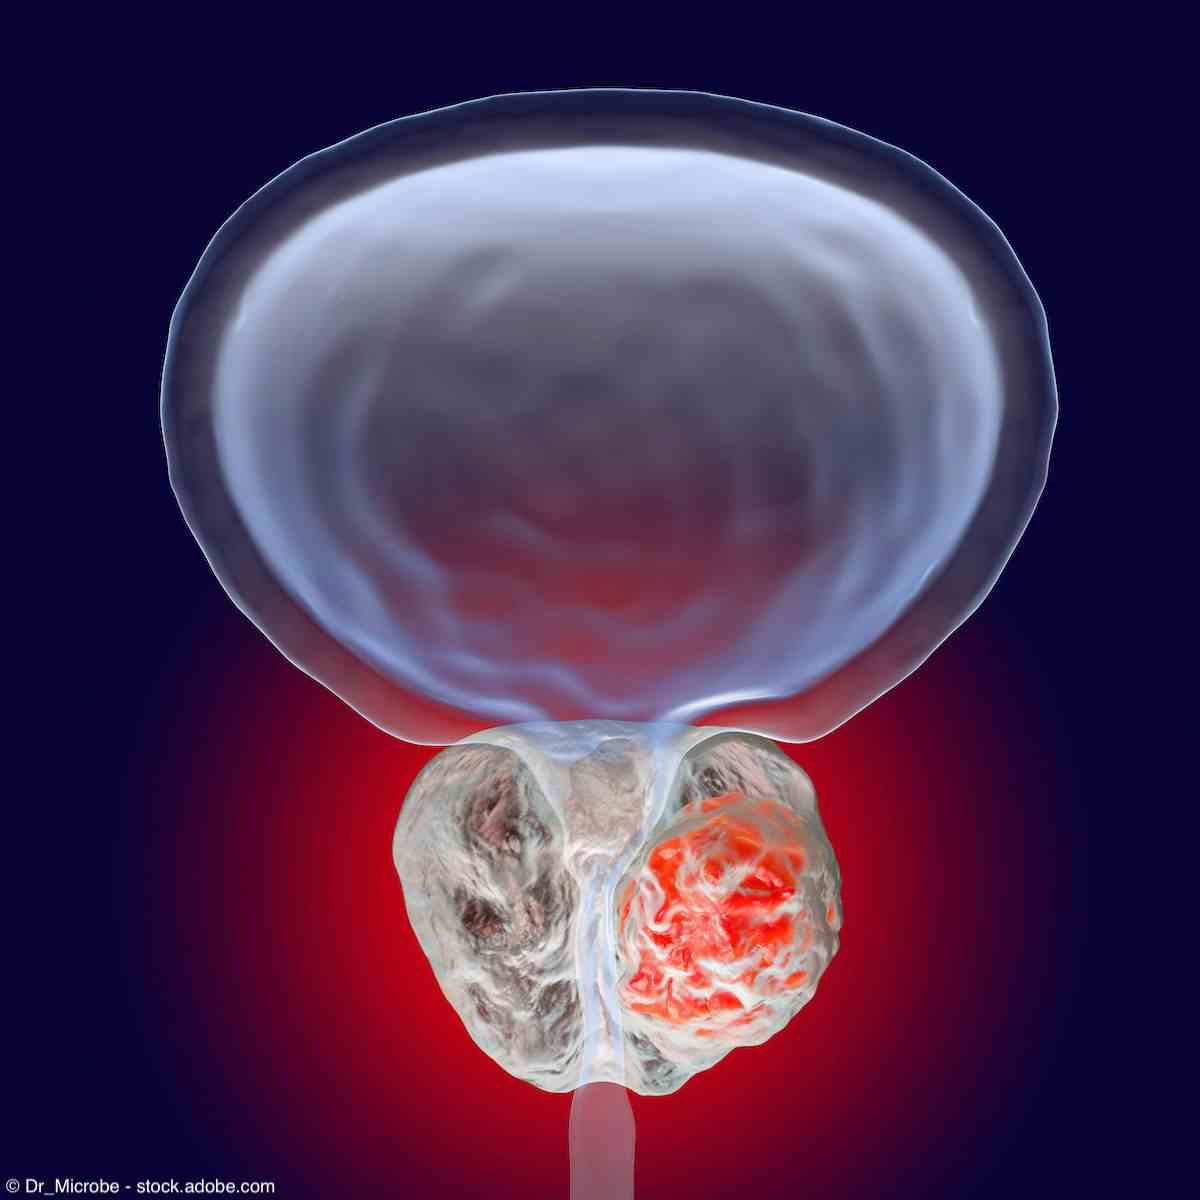 Prostate cancer, 3D illustration showing presence of tumor inside prostate gland which compresses urethra | Image Credit: © Dr_Microbe - stock.adobe.com